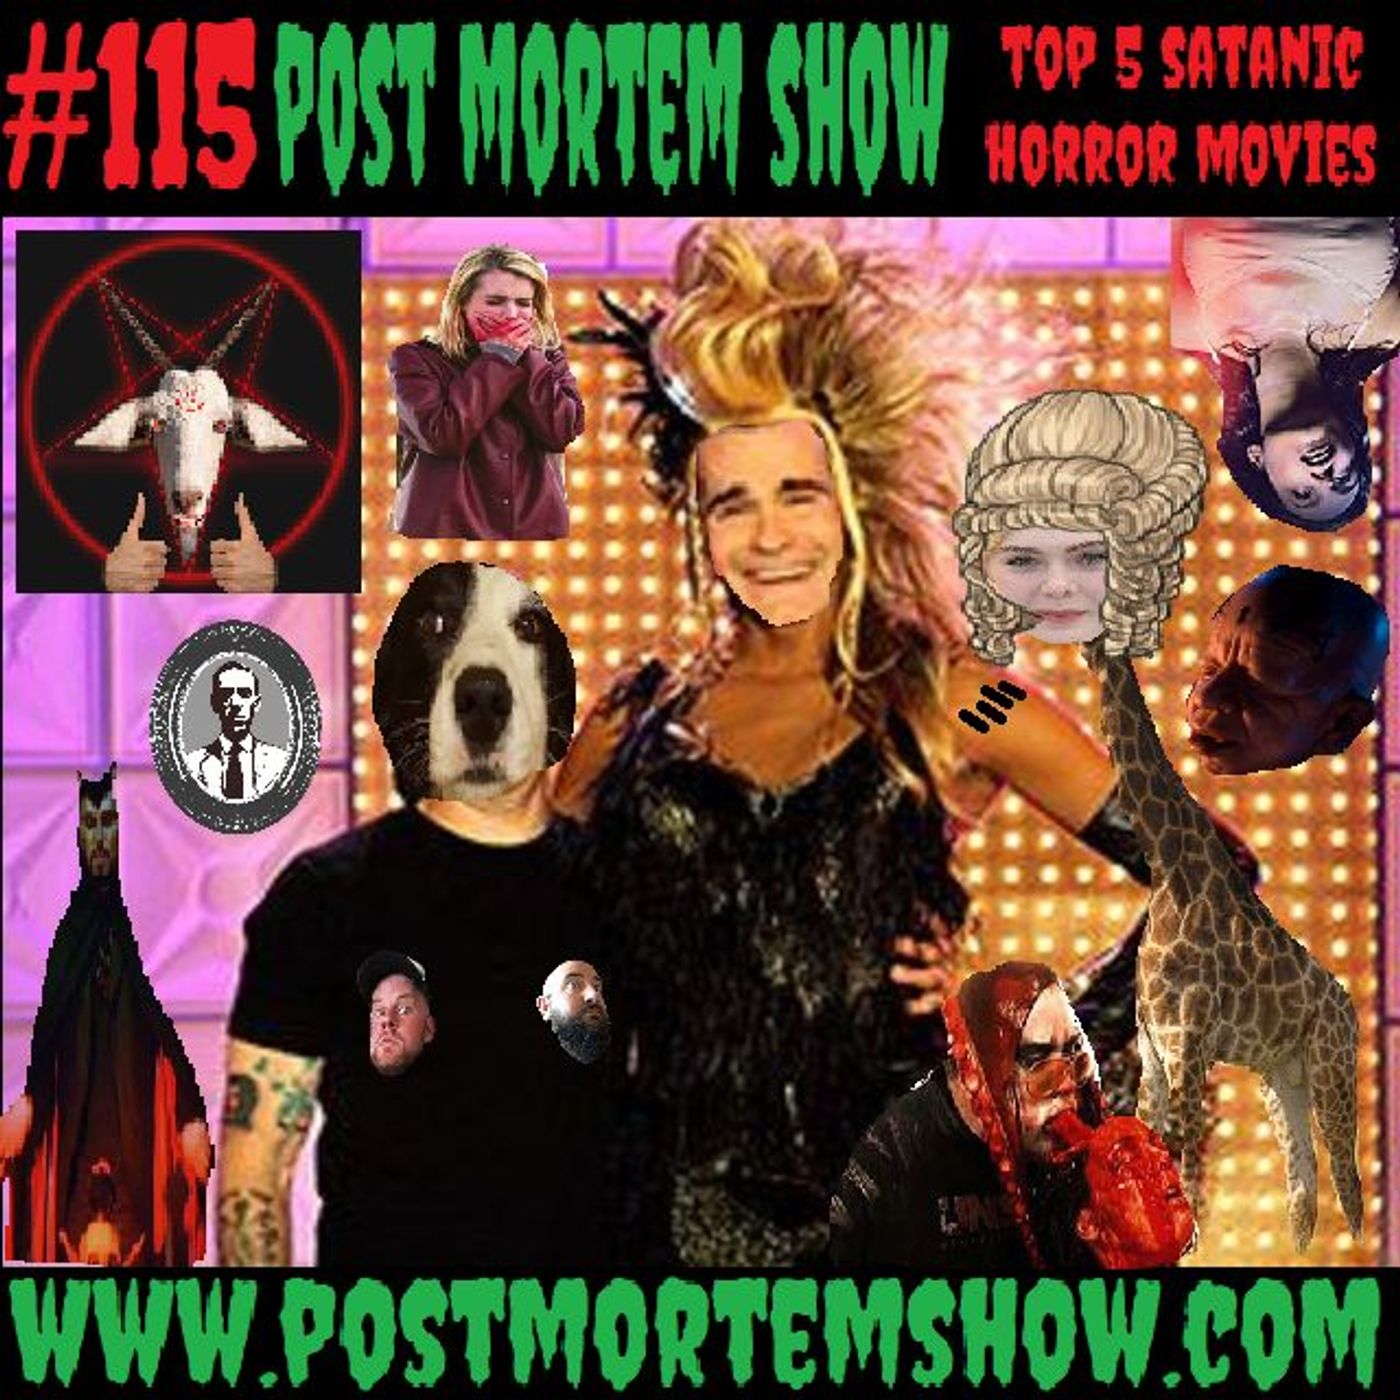 e115 Satanic Panic! (Top 5 Satanic Horror Movies) from Post Mortem